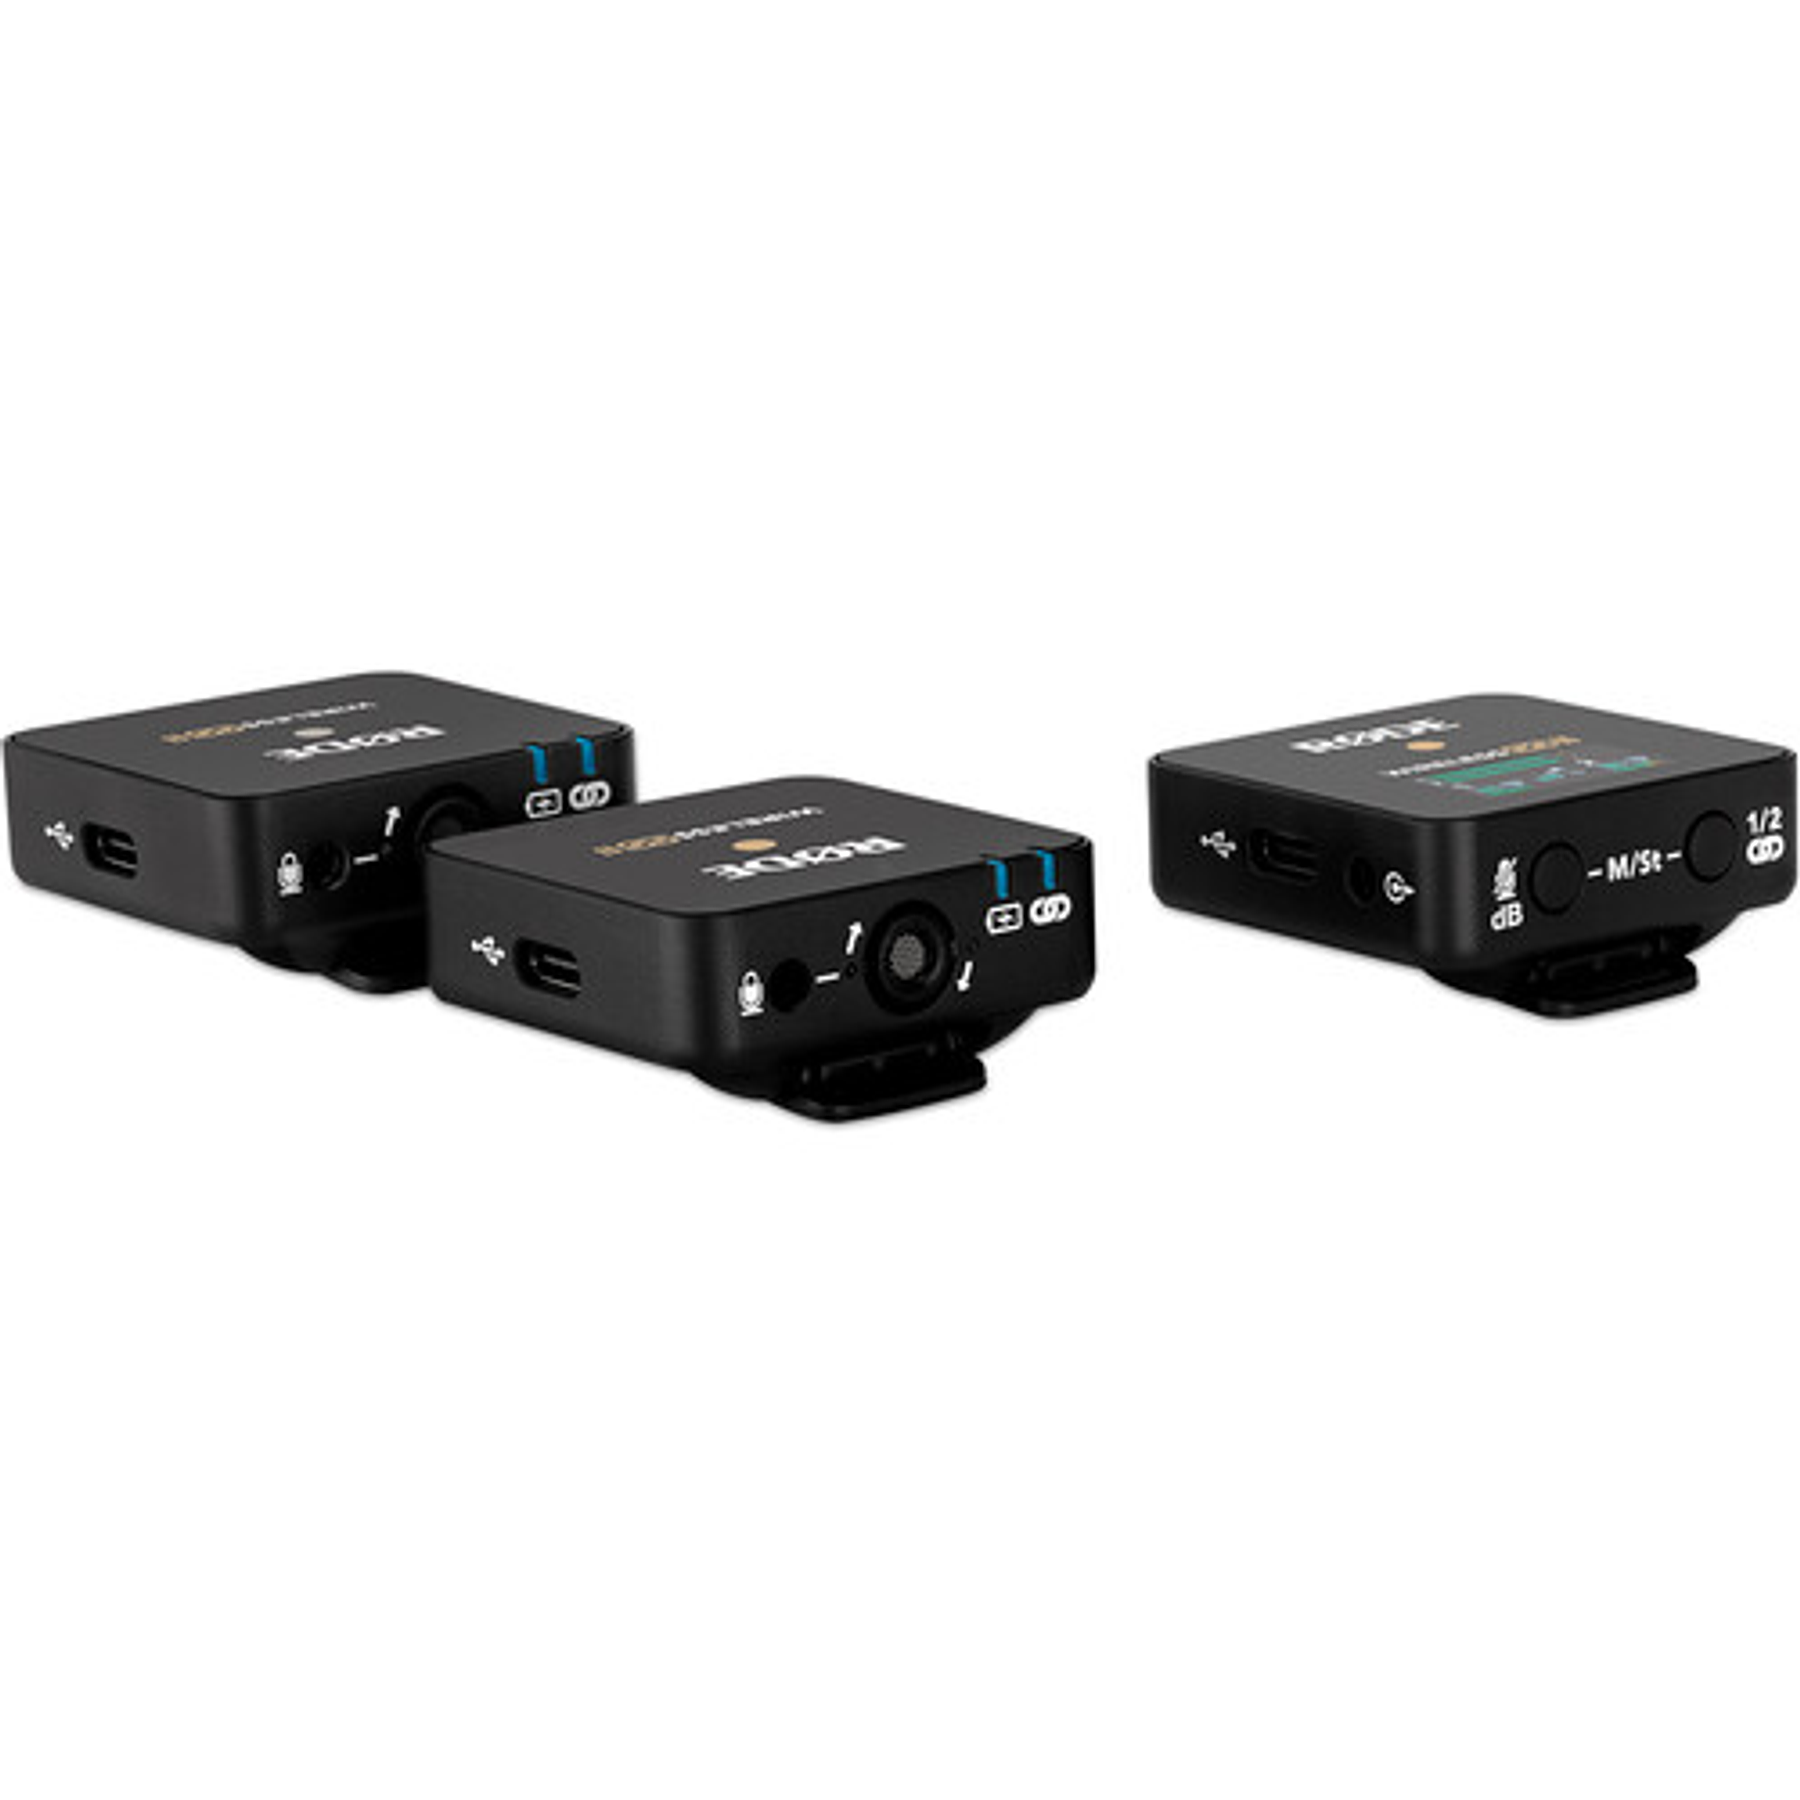 Sistema/grabadora inalámbrica digital compacta Rode Wireless GO II para 2 personas (2,4 GHz, negro)